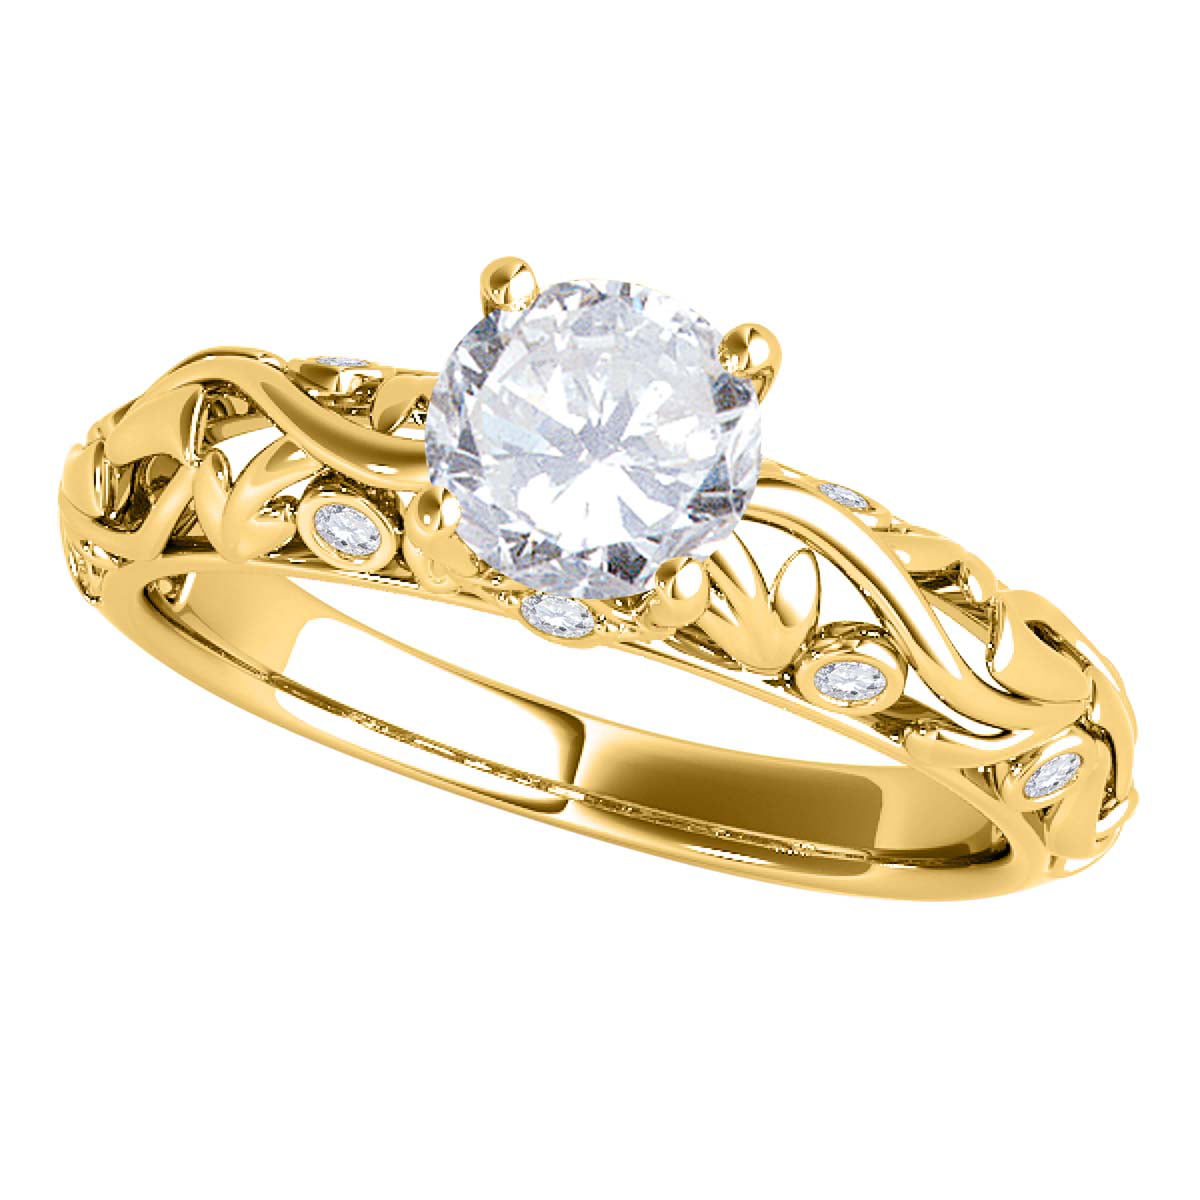 18k White and Yellow Gold Diamond Ring